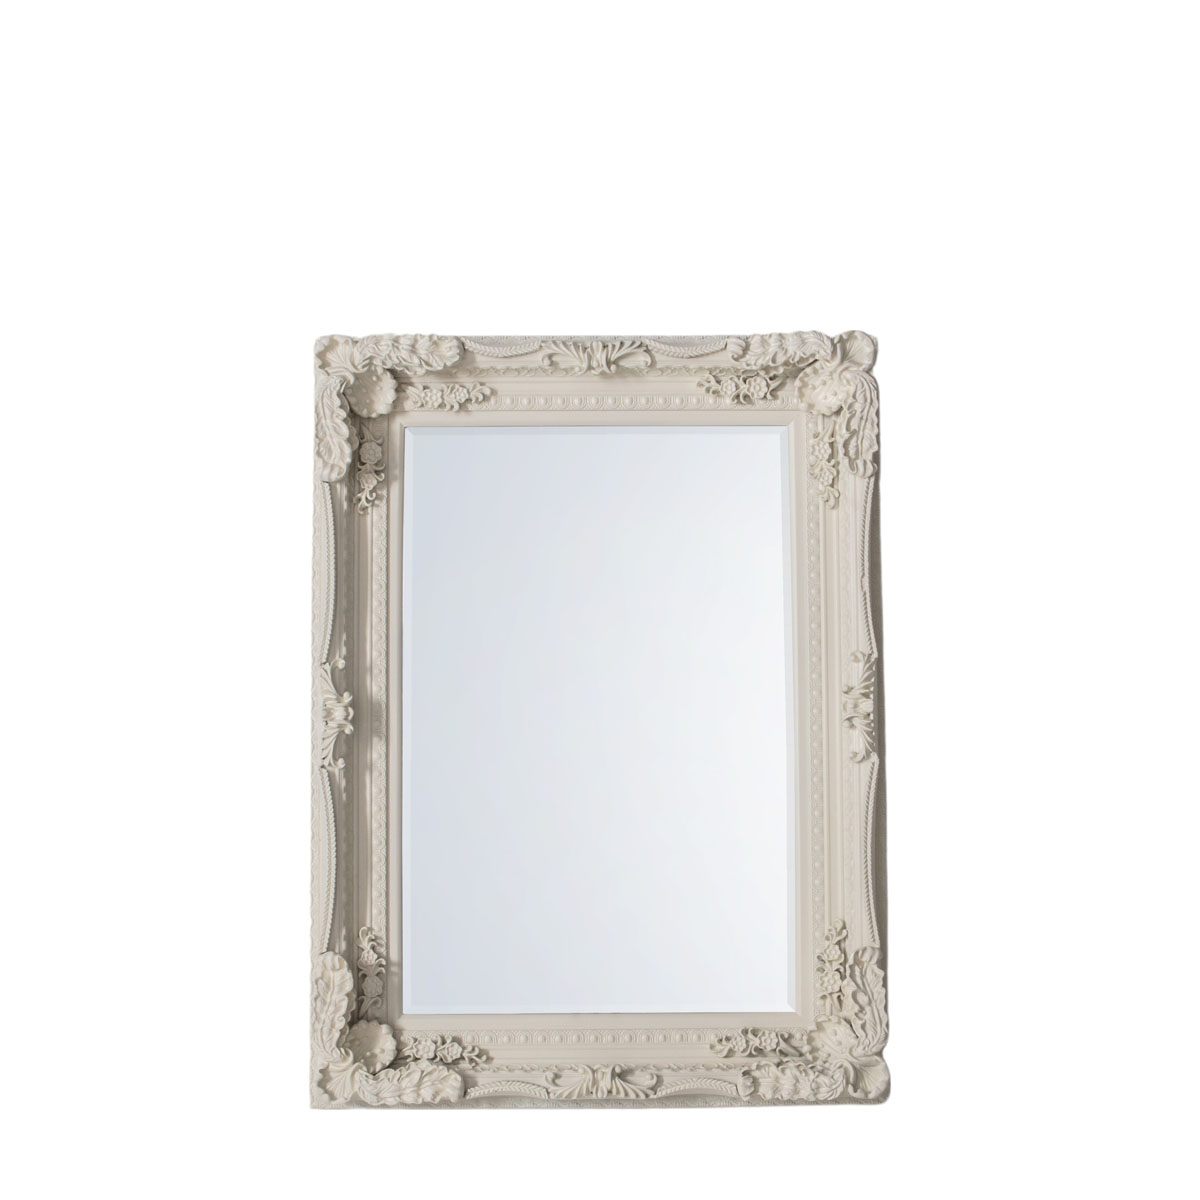 Carved Louis Mirror Cream 1190x890mm